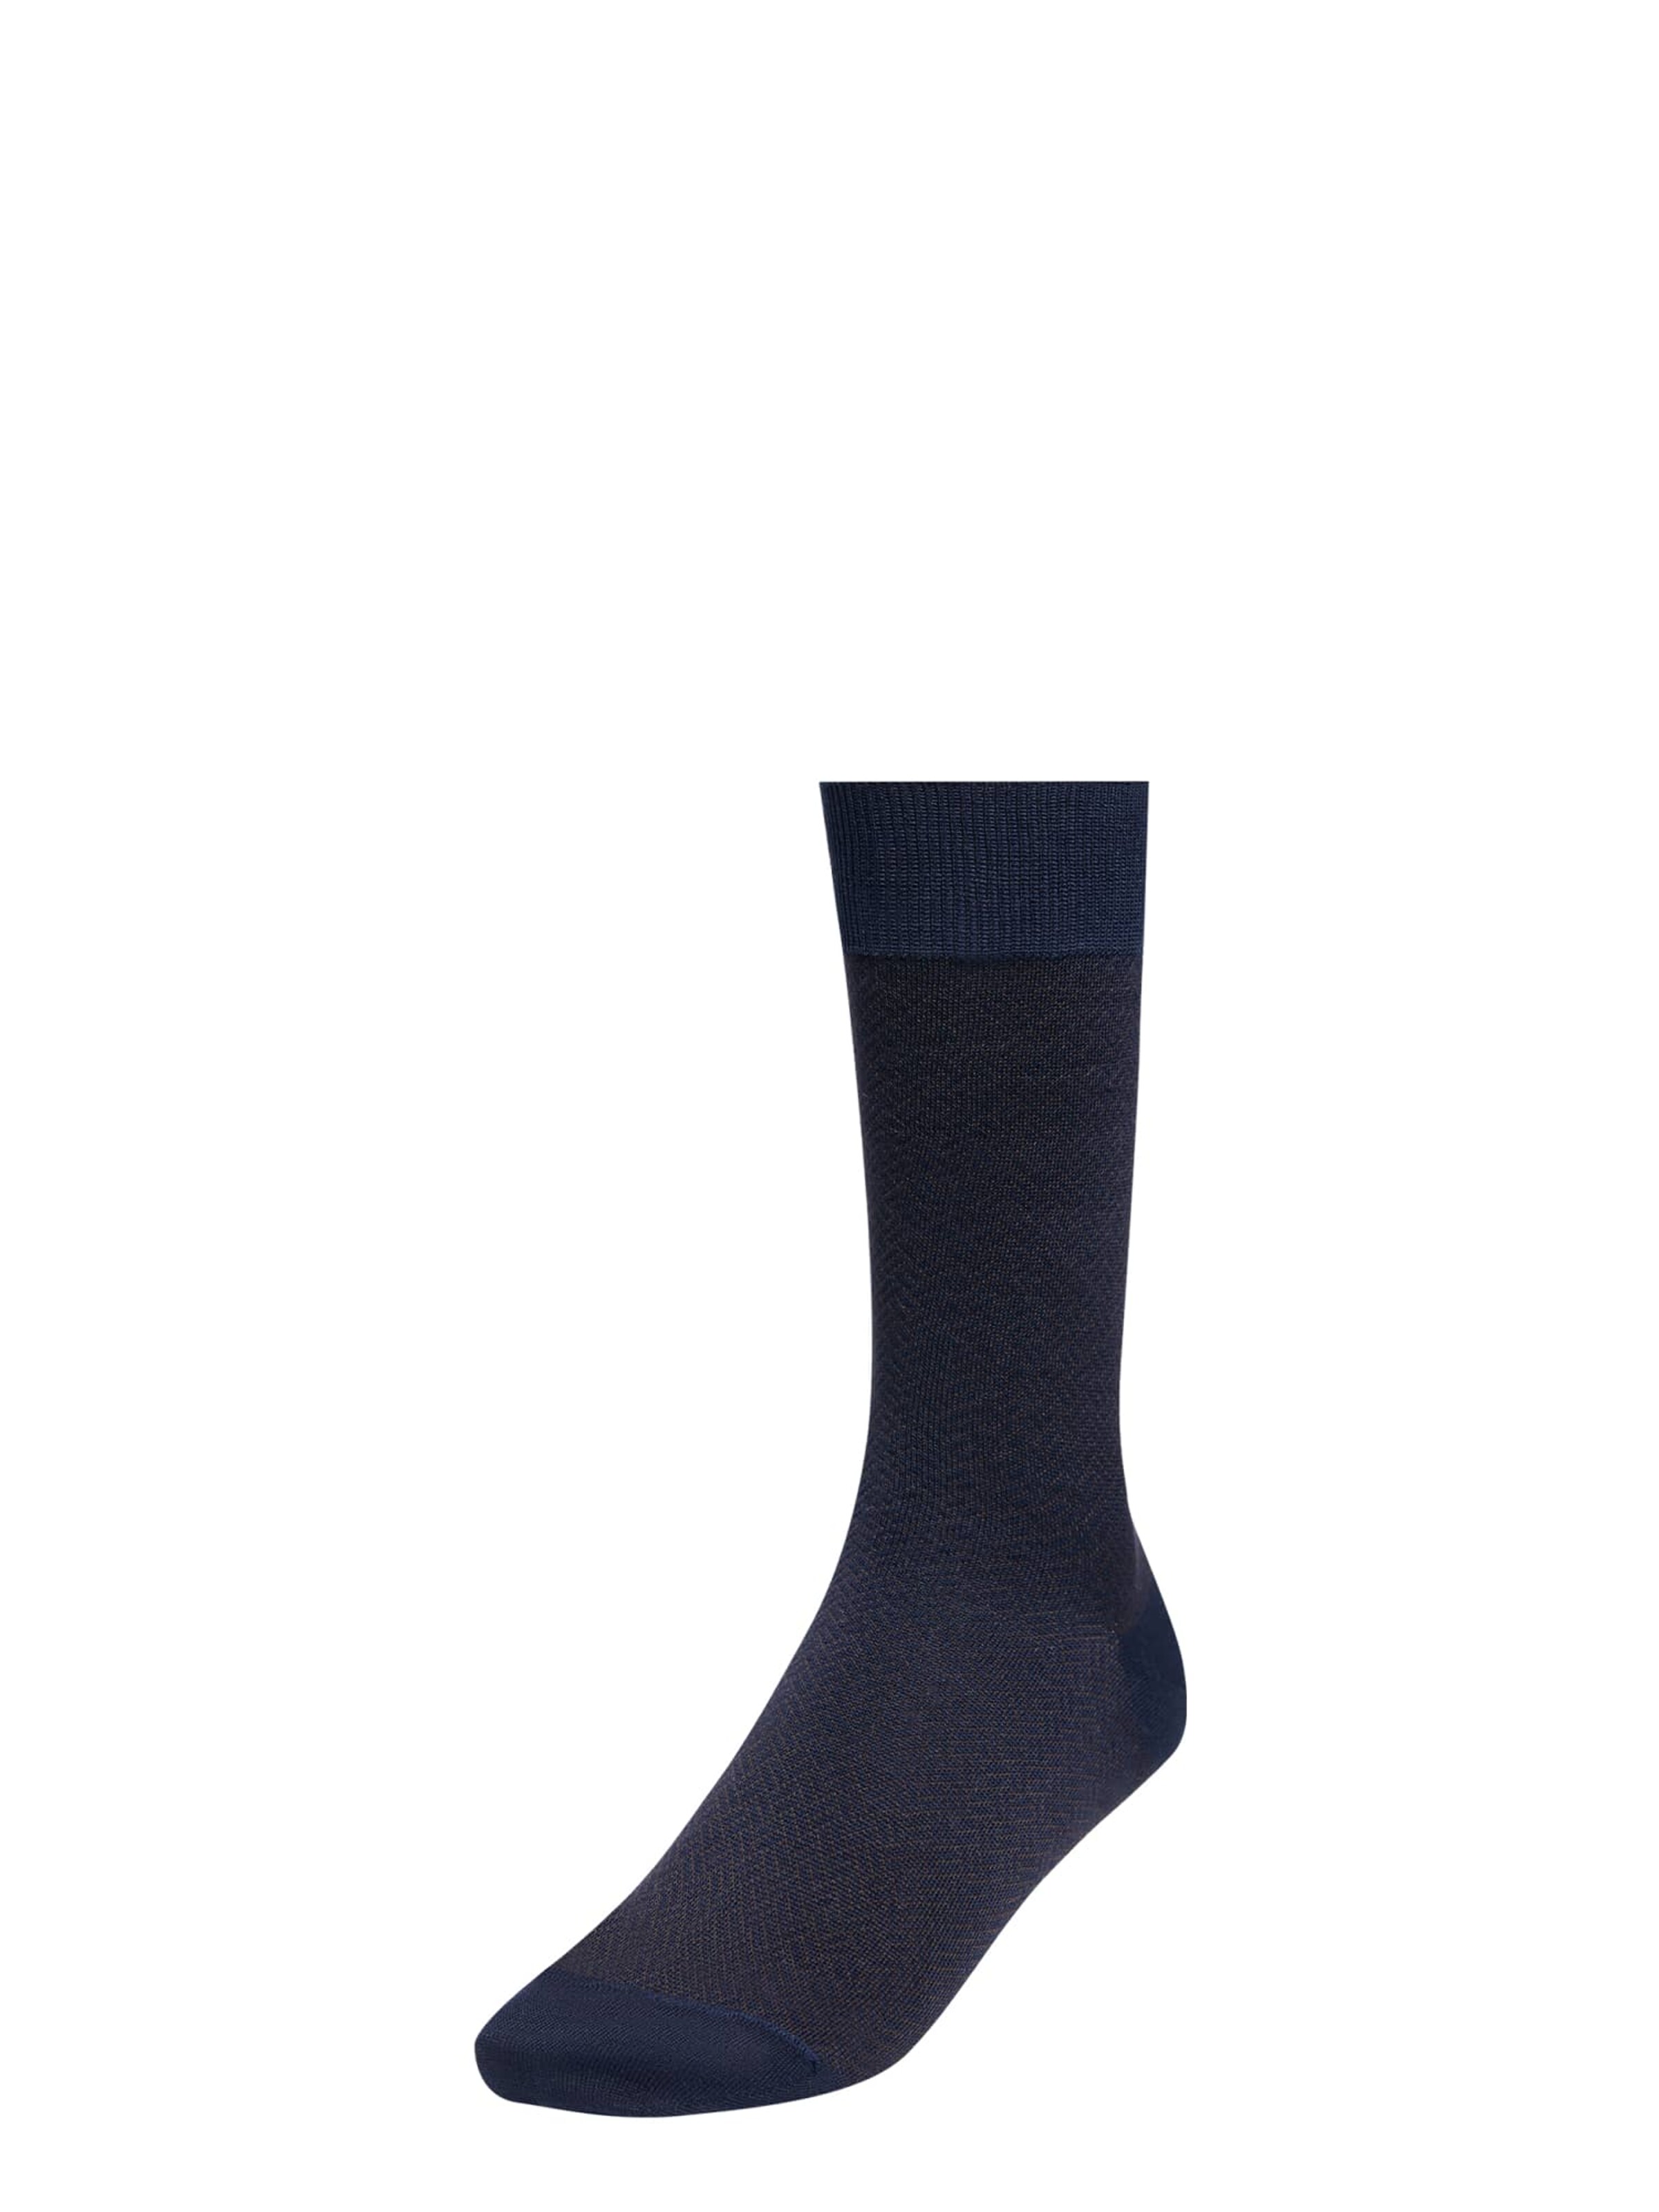 Männer Wäsche Boggi Milano Socken in Ultramarinblau, Dunkelbraun - NJ61184